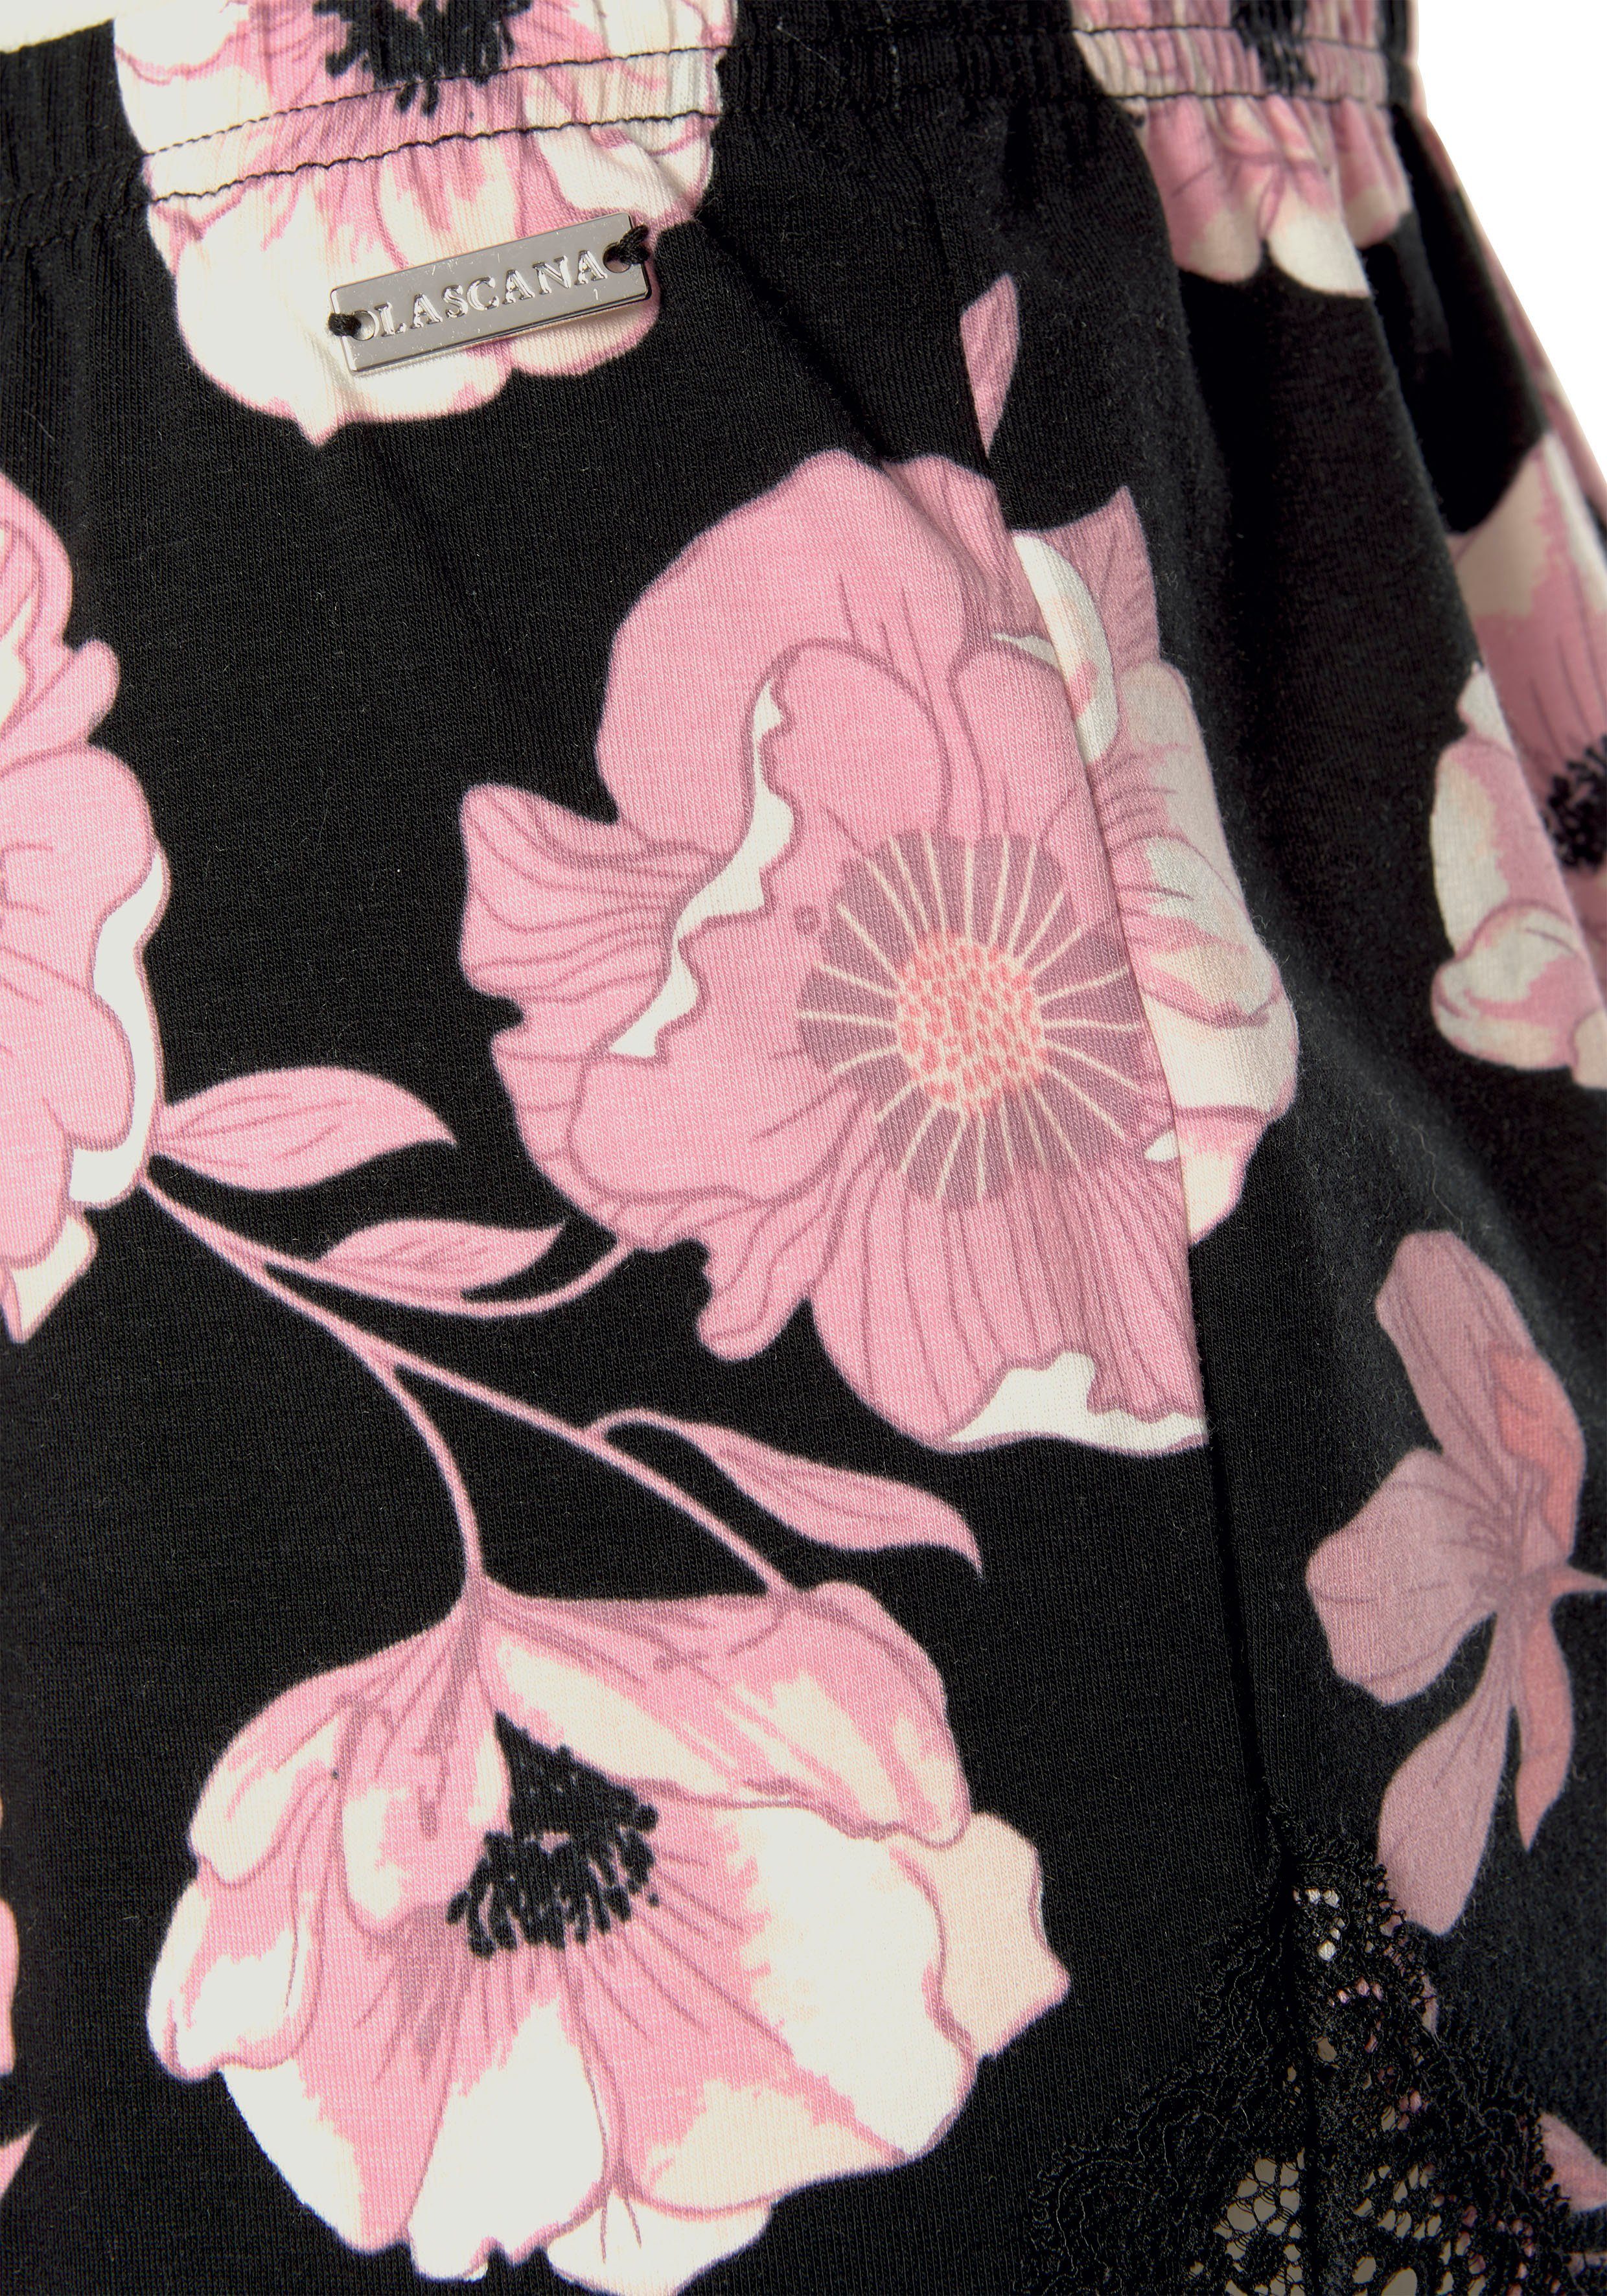 Spitzeneinsätzen mit rosa-schwarz-geblümt-gemustert LASCANA Shorts